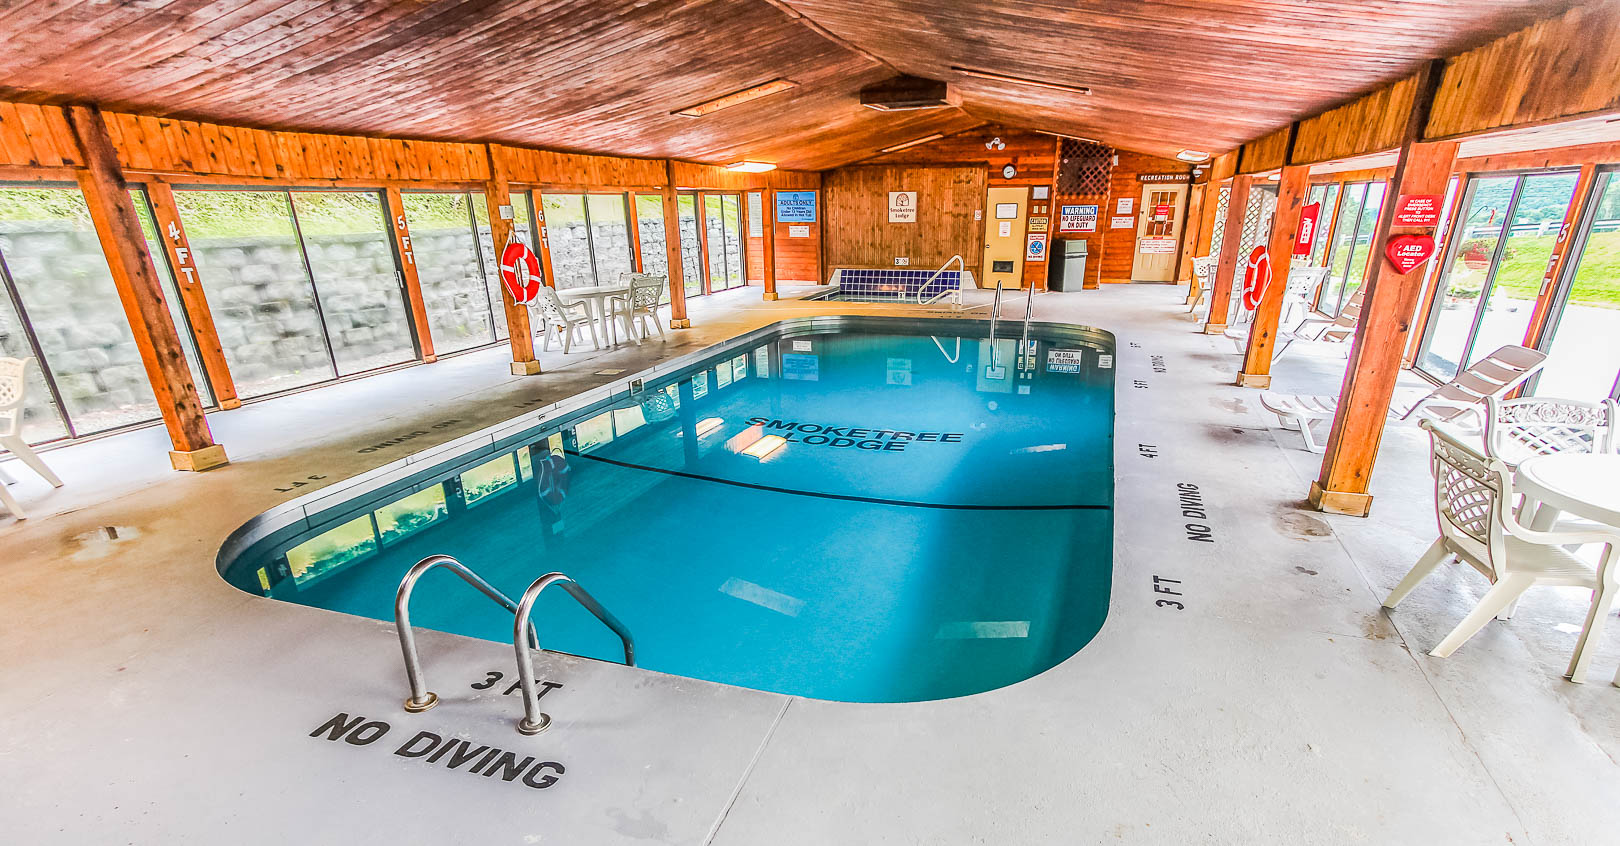 A spacious indoor swimming pool at VRI's Smoketree lodge in North Carolina.